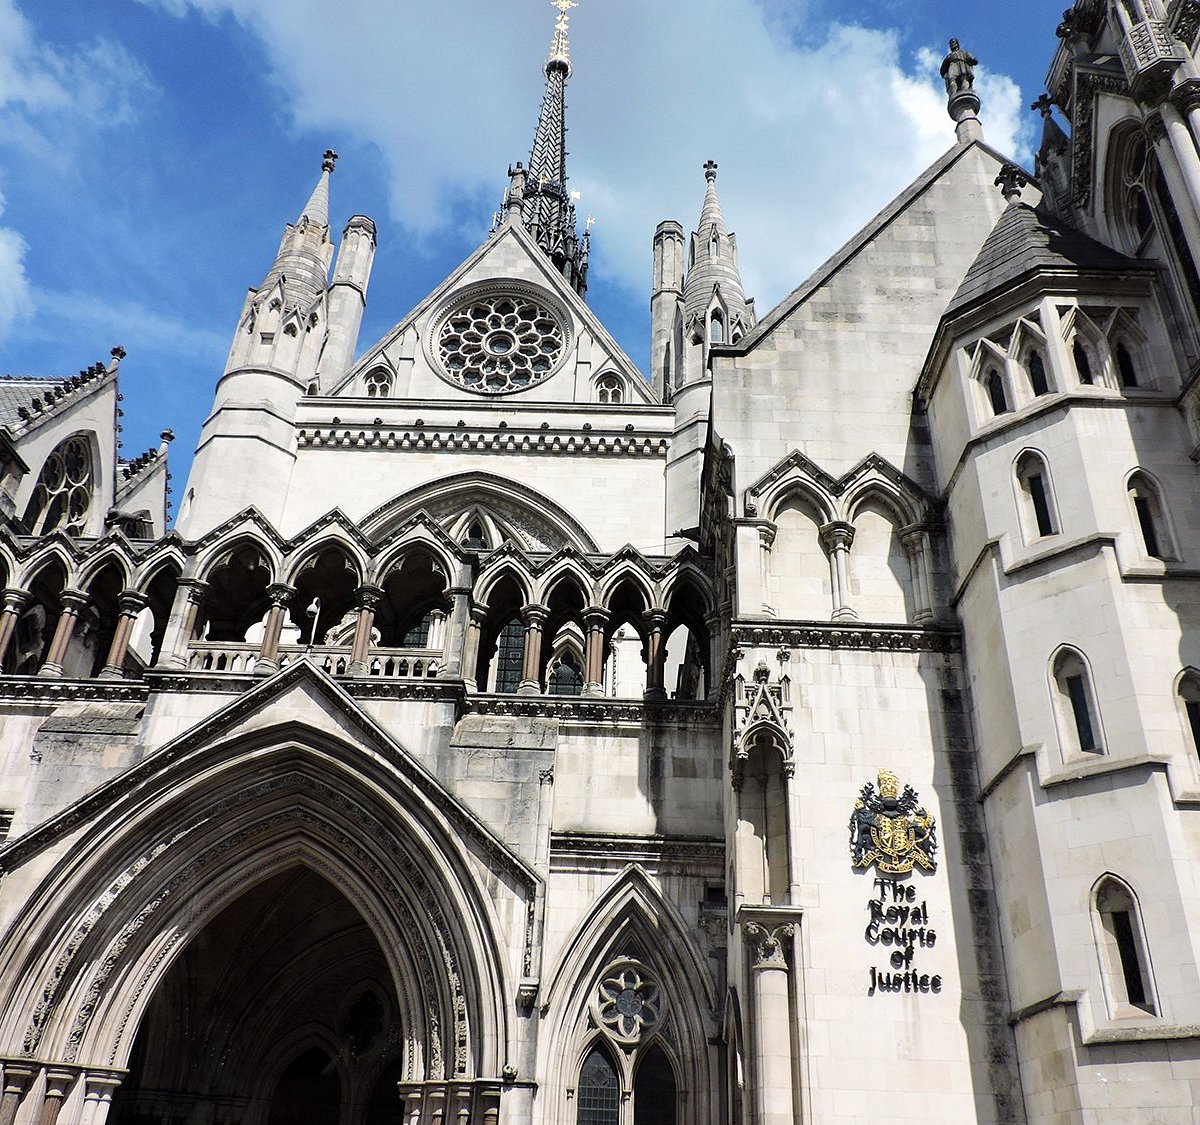 london supreme court tour